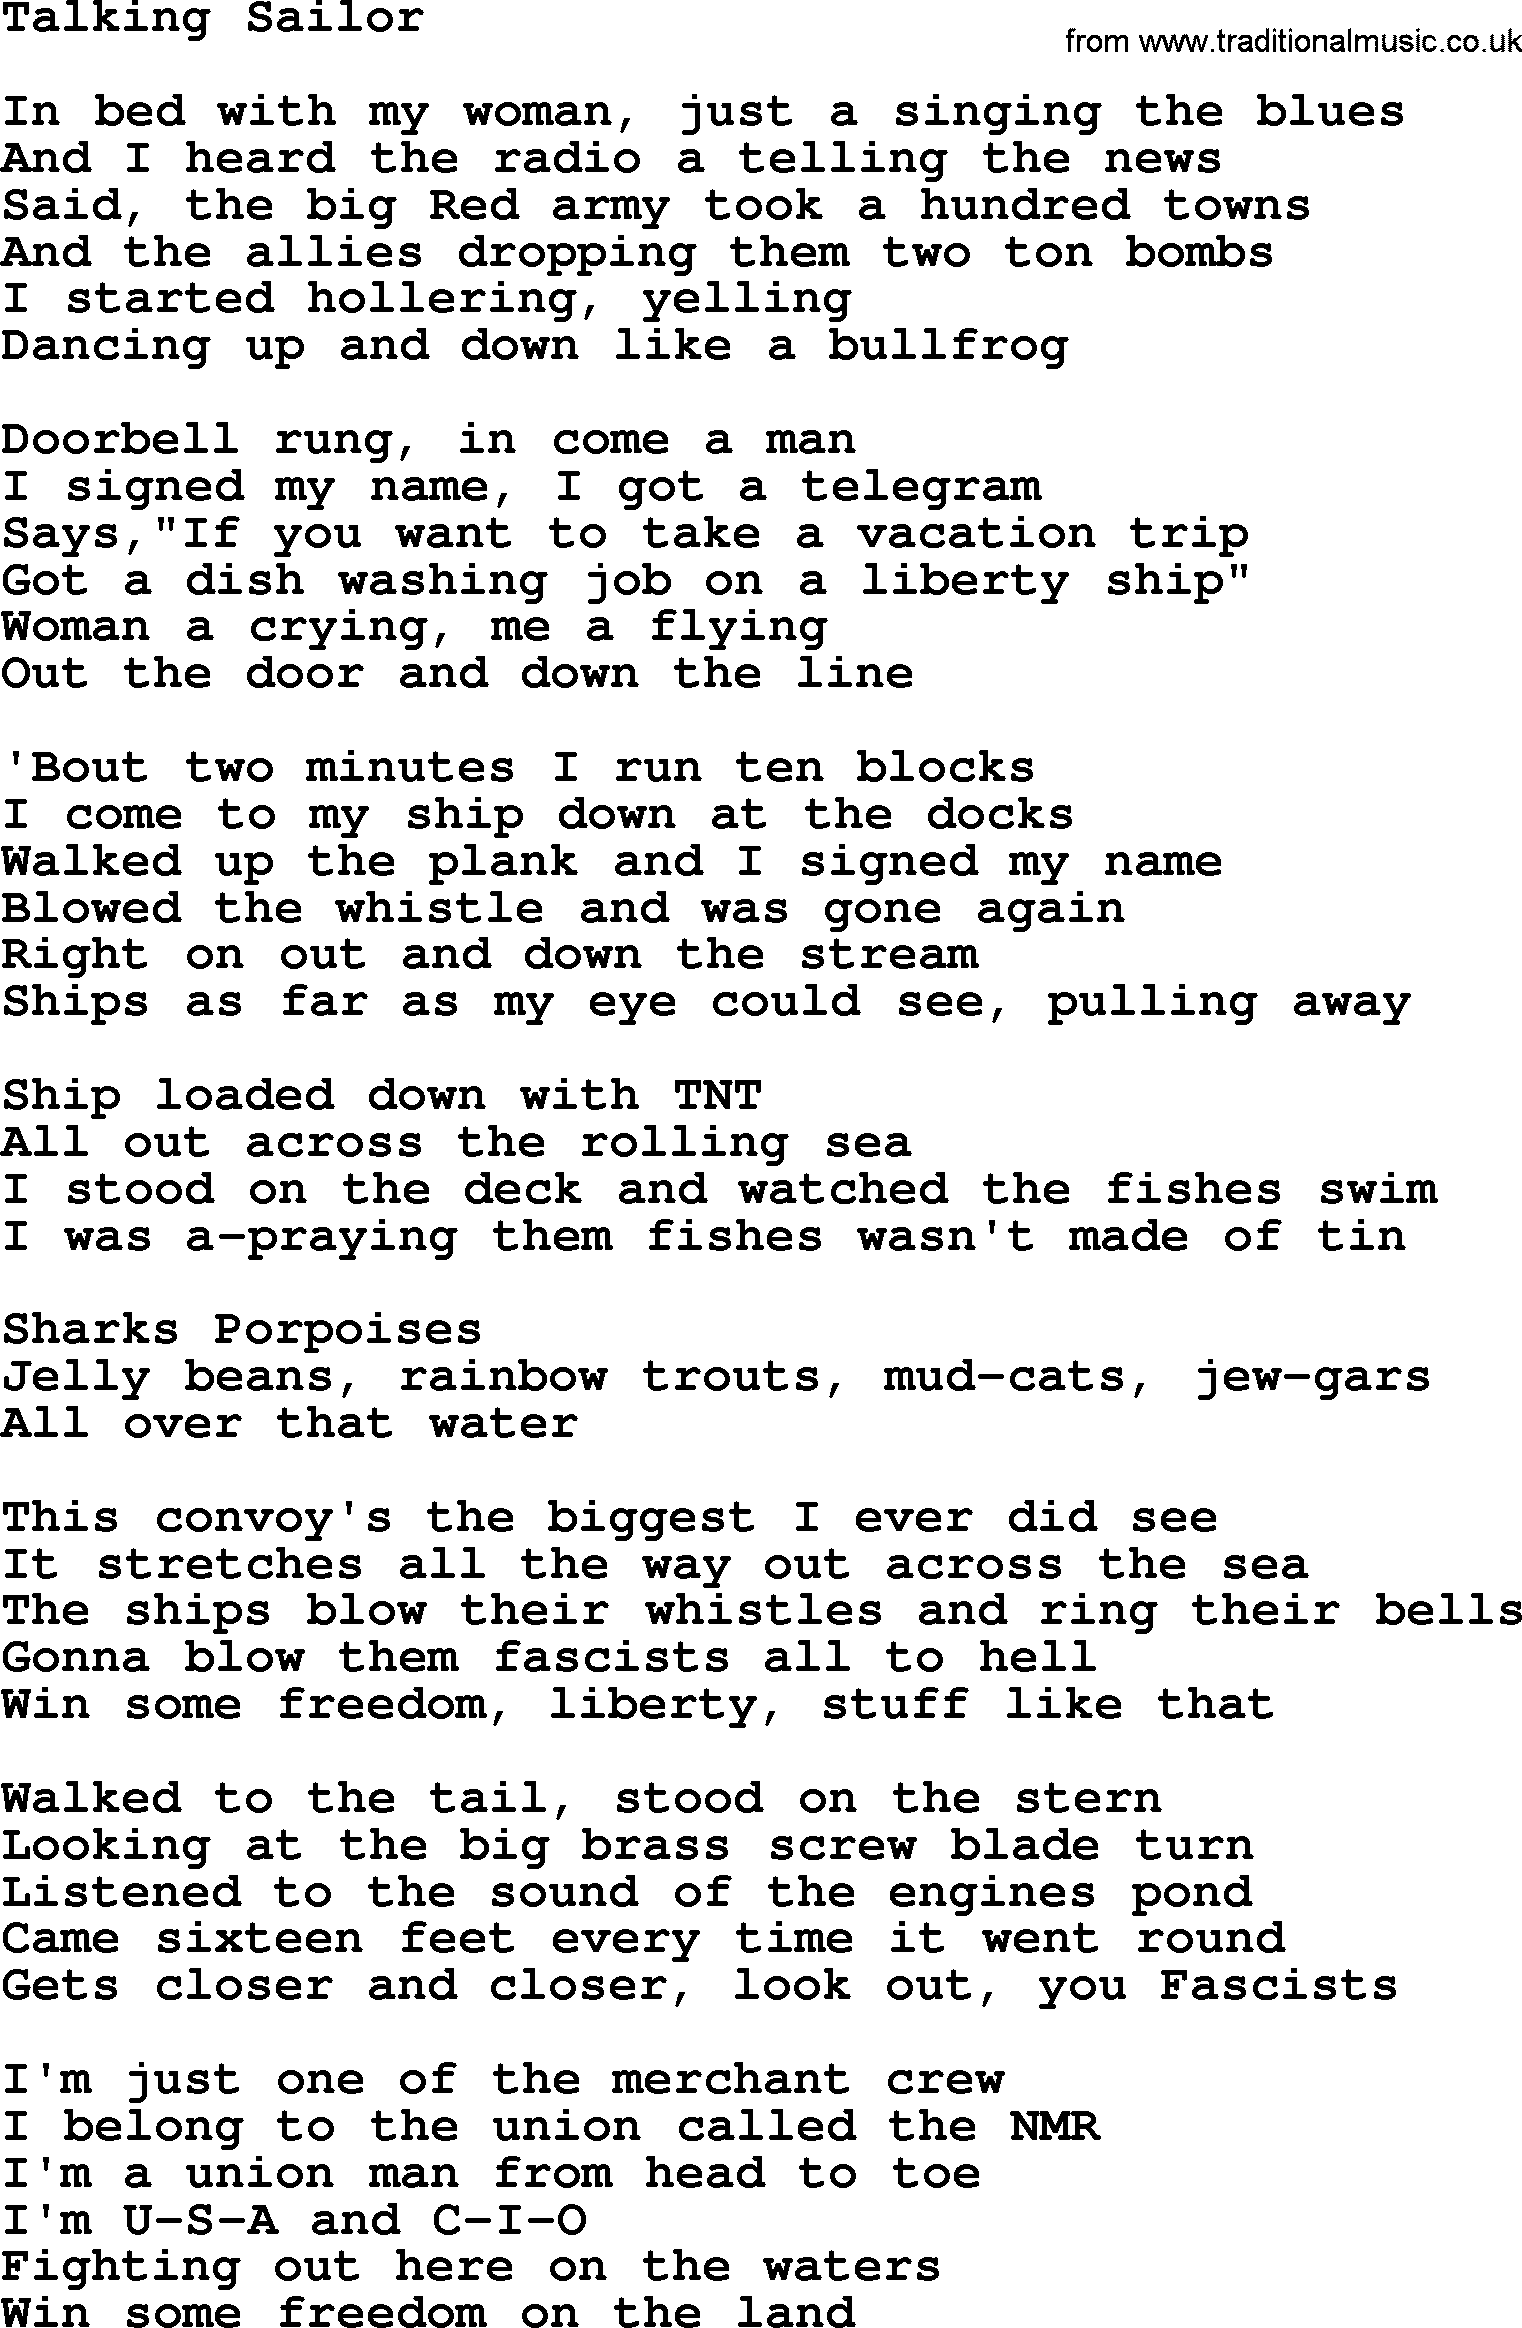 Woody Guthrie song Talking Sailor lyrics